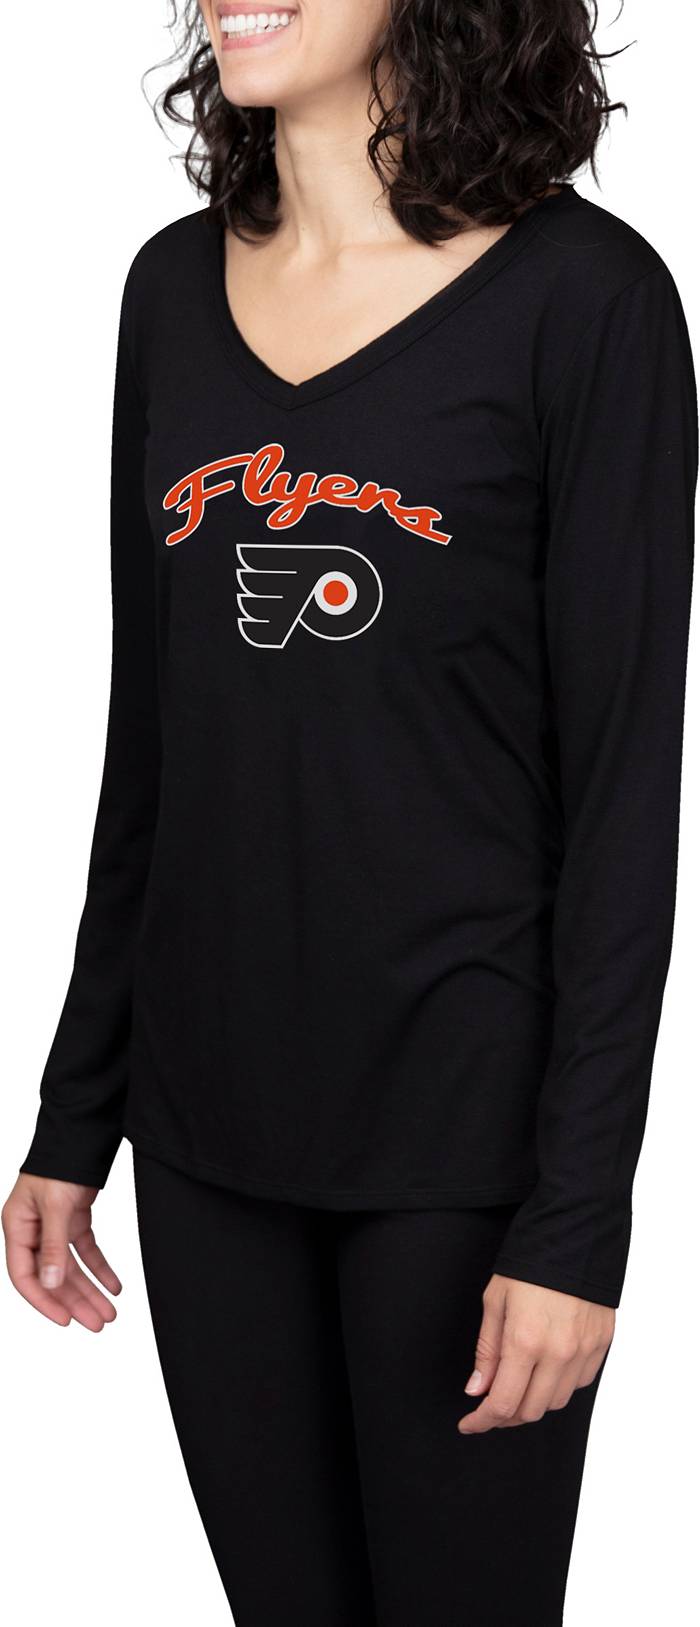 Women's Black Philadelphia Flyers Long Sleeve T-Shirt Size: Small